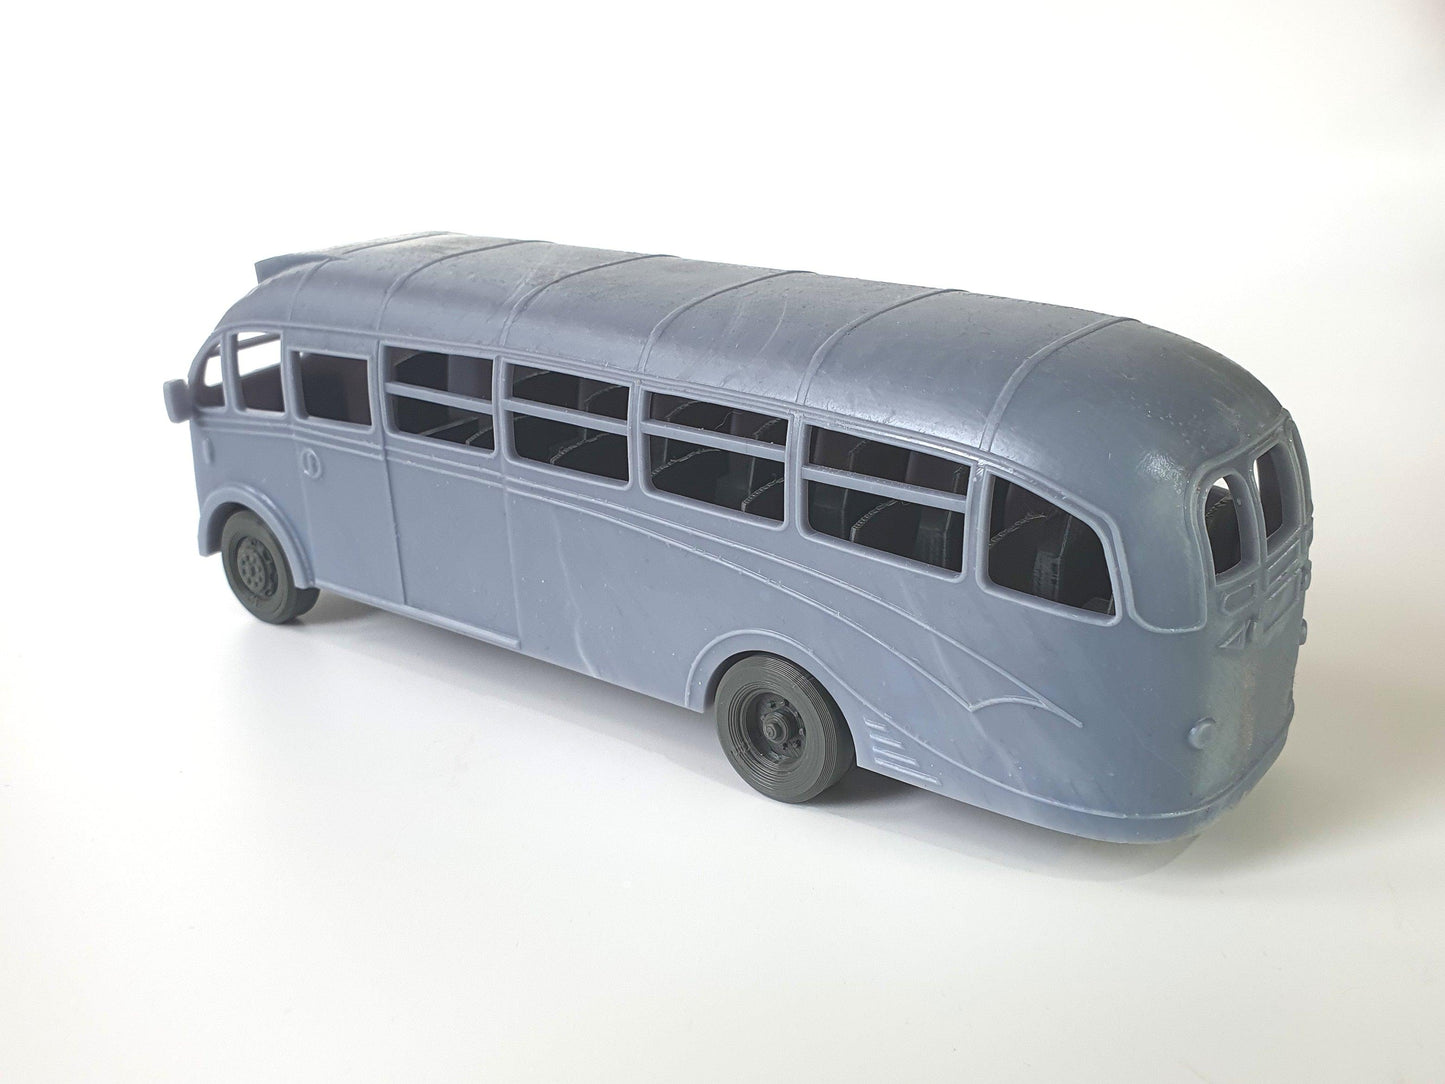 Albion Victor bus model